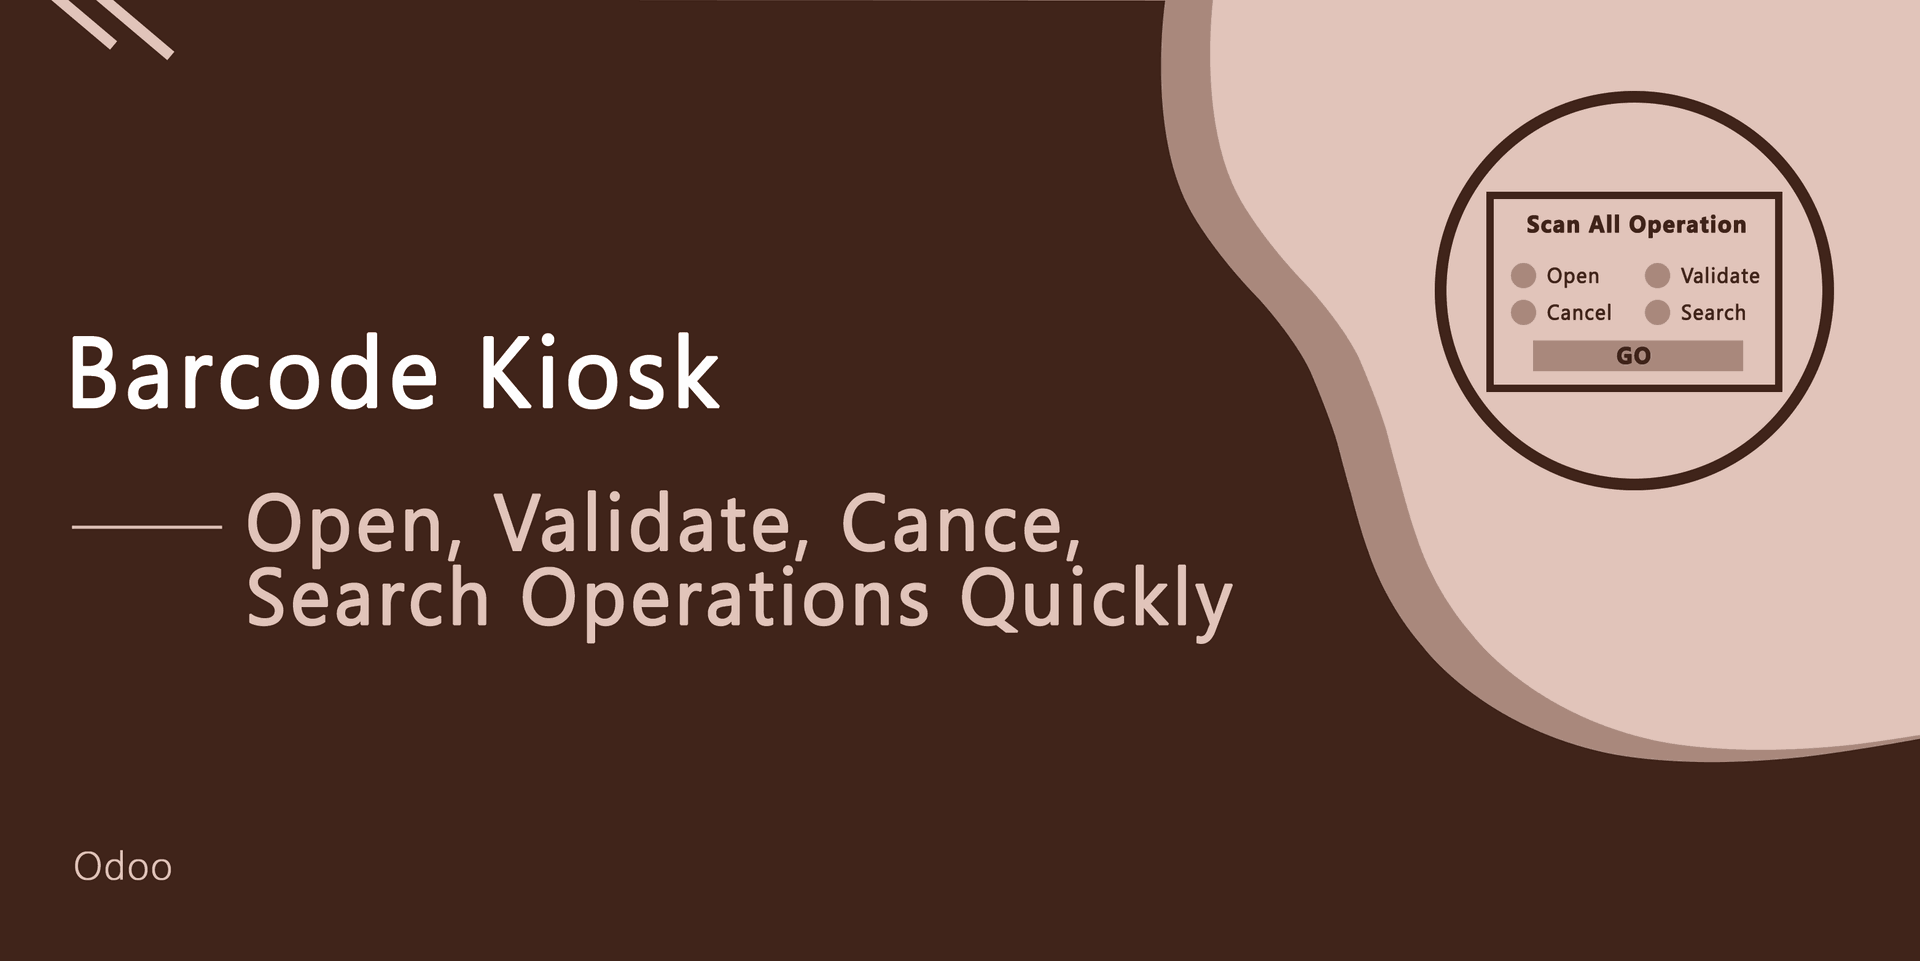 Barcode Operation Kiosk